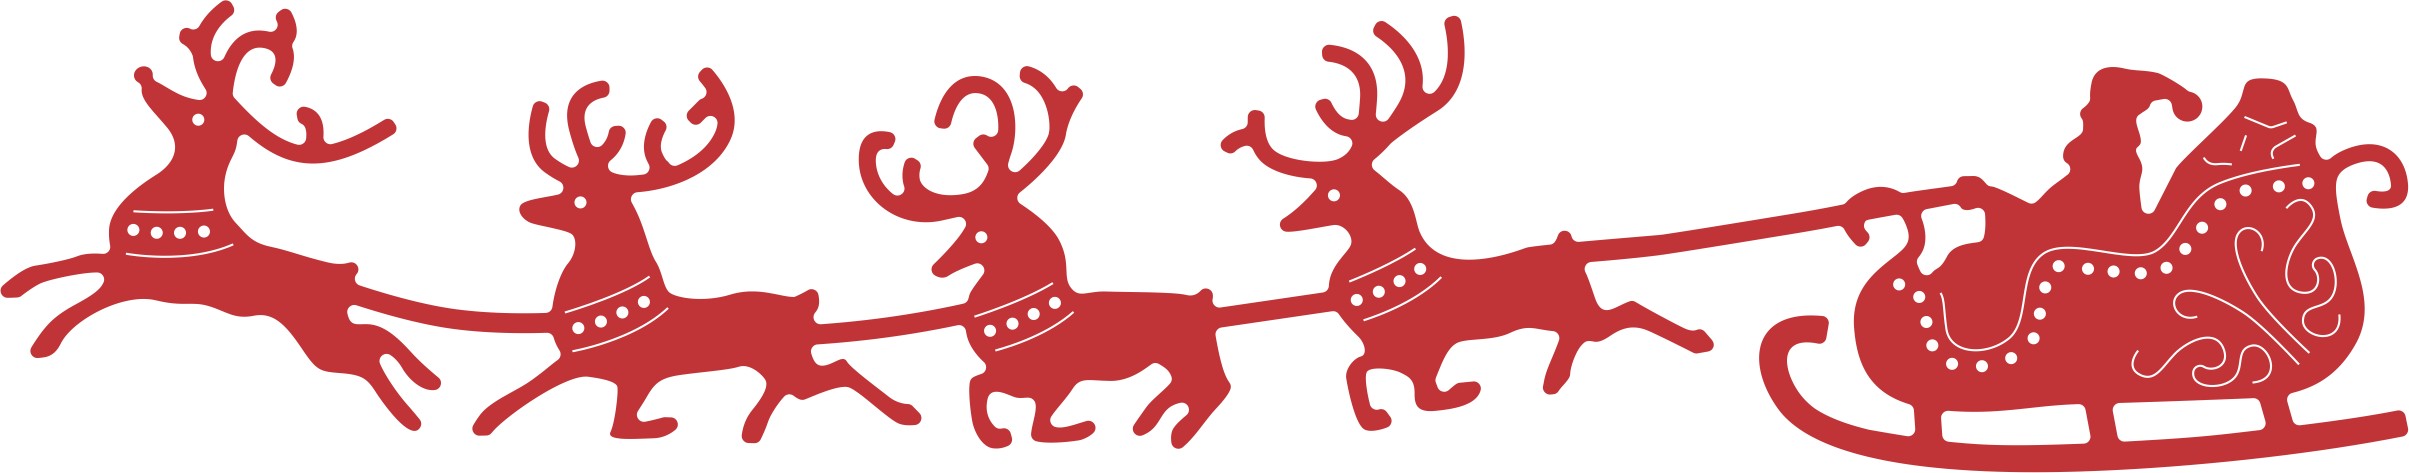 santa clipart with sleigh - photo #23